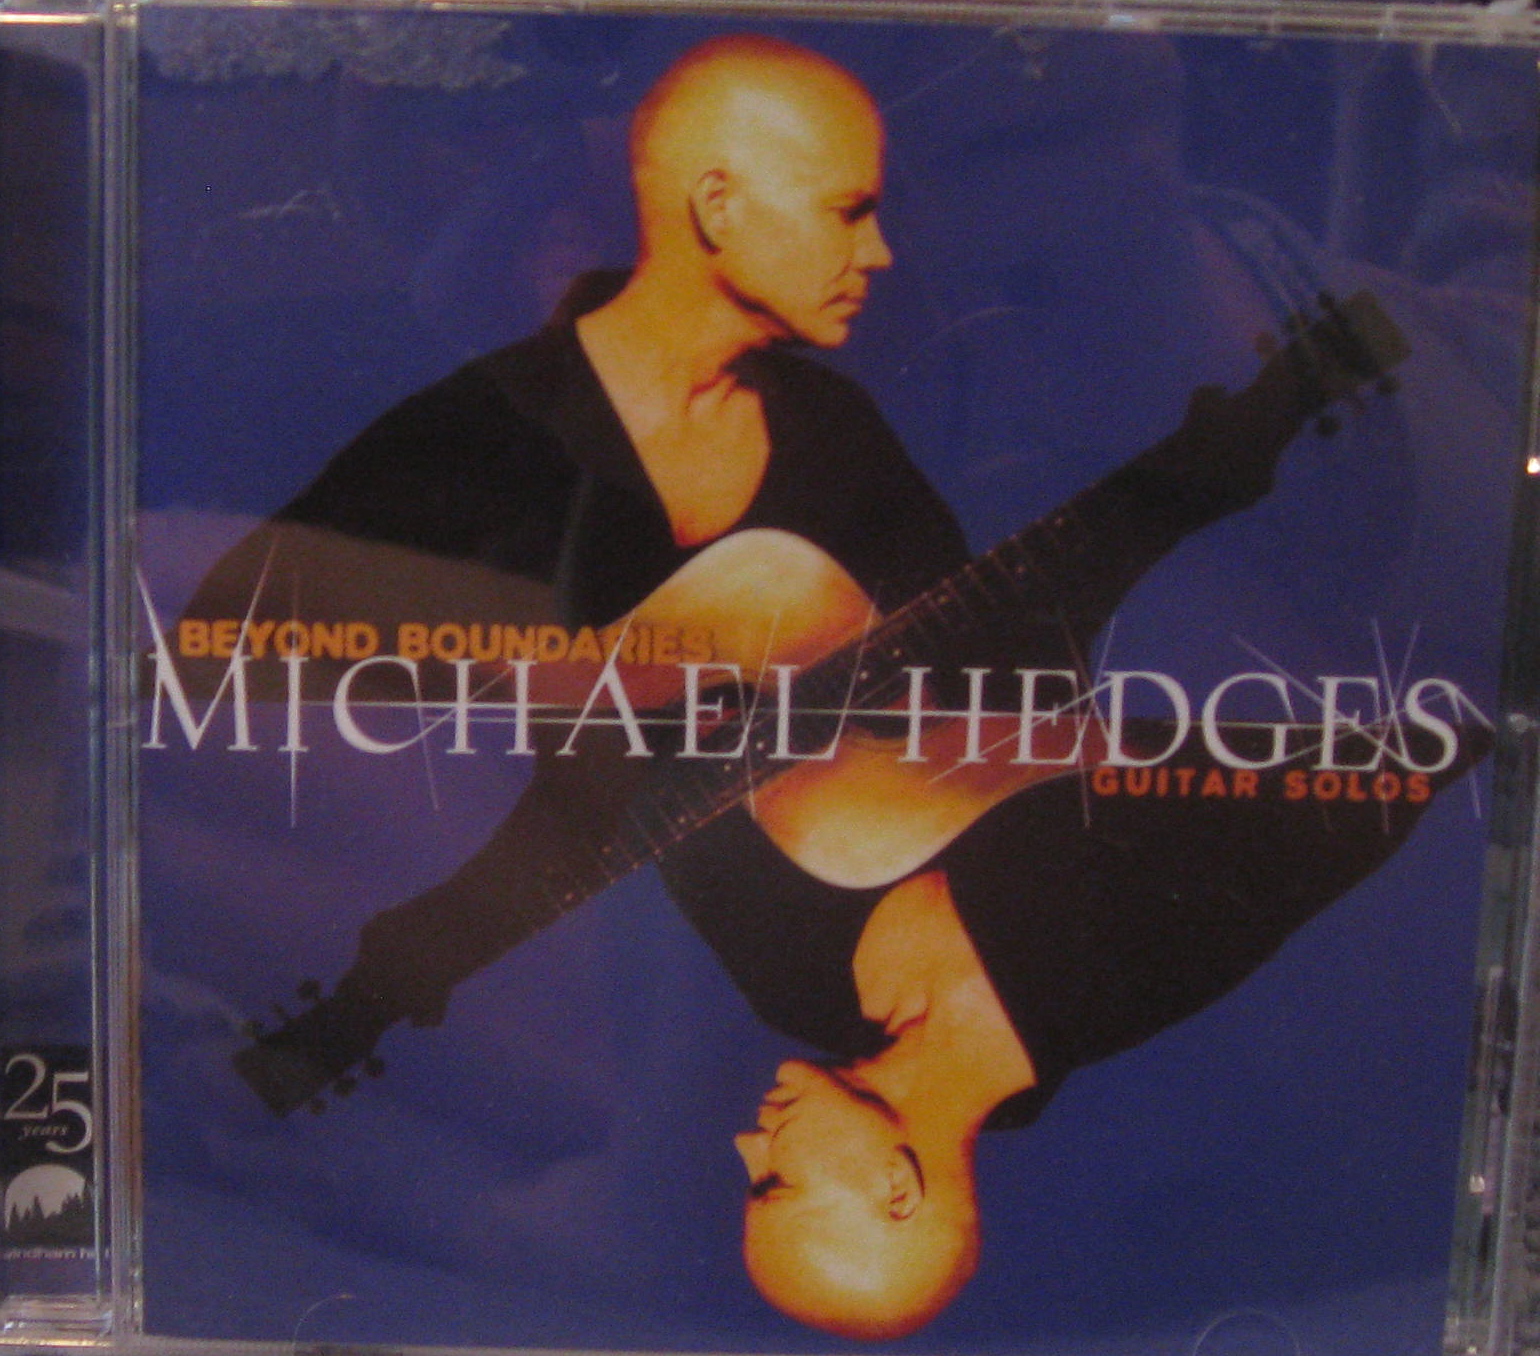 Michael Hedges- beyond boundaries (guitar solos)